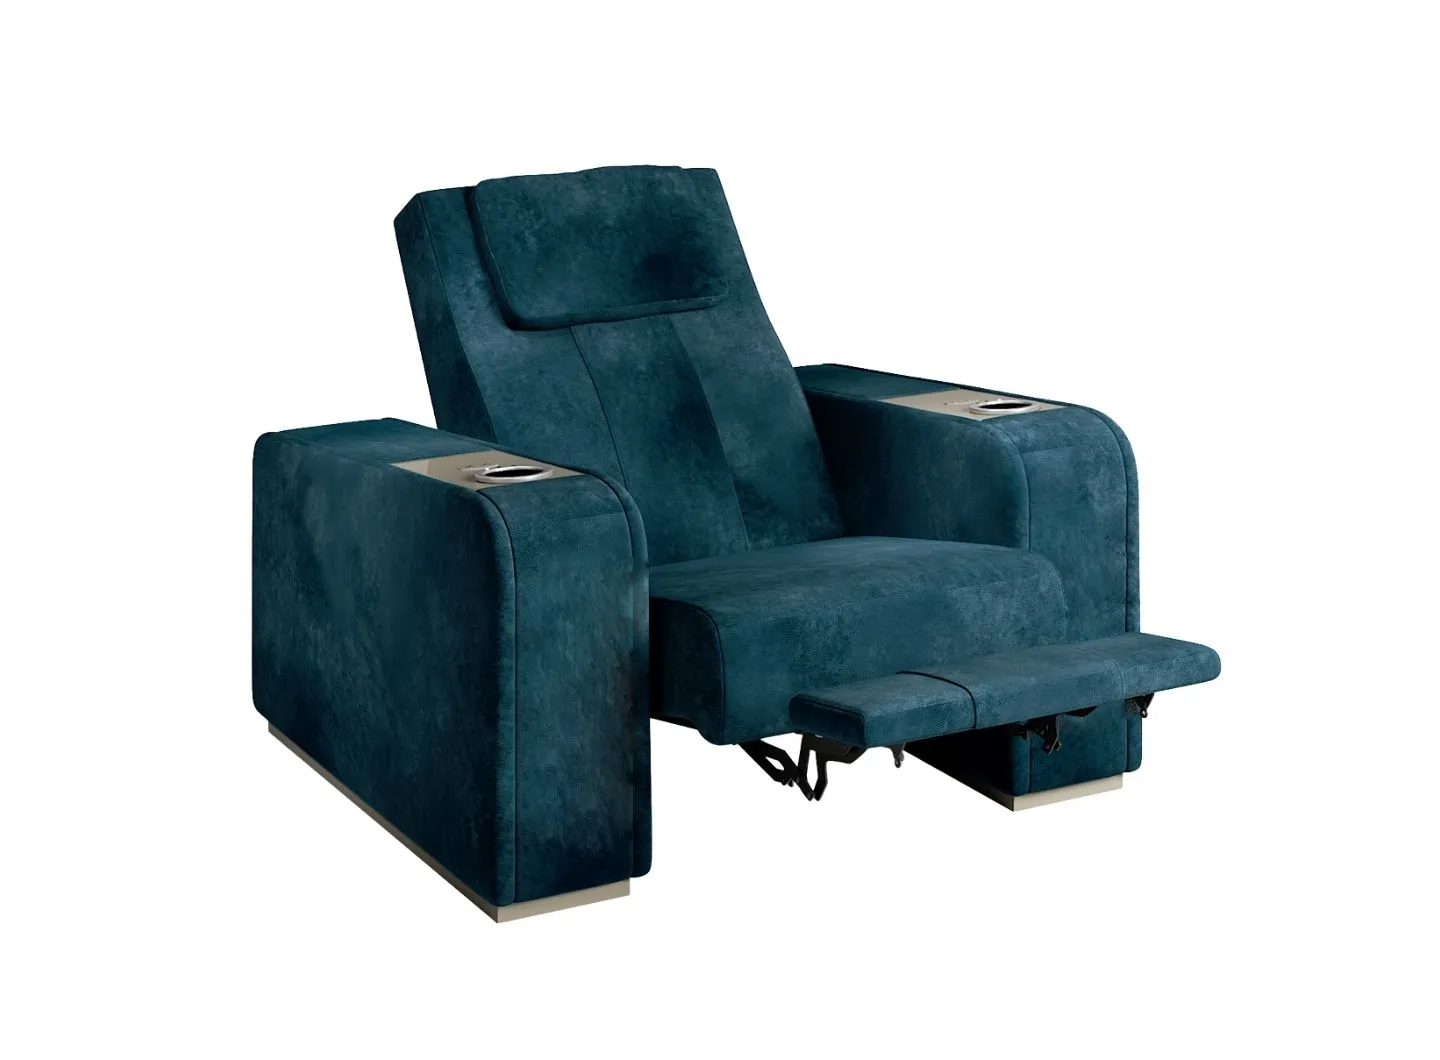 Emerald home cinema chair by Vismara Design